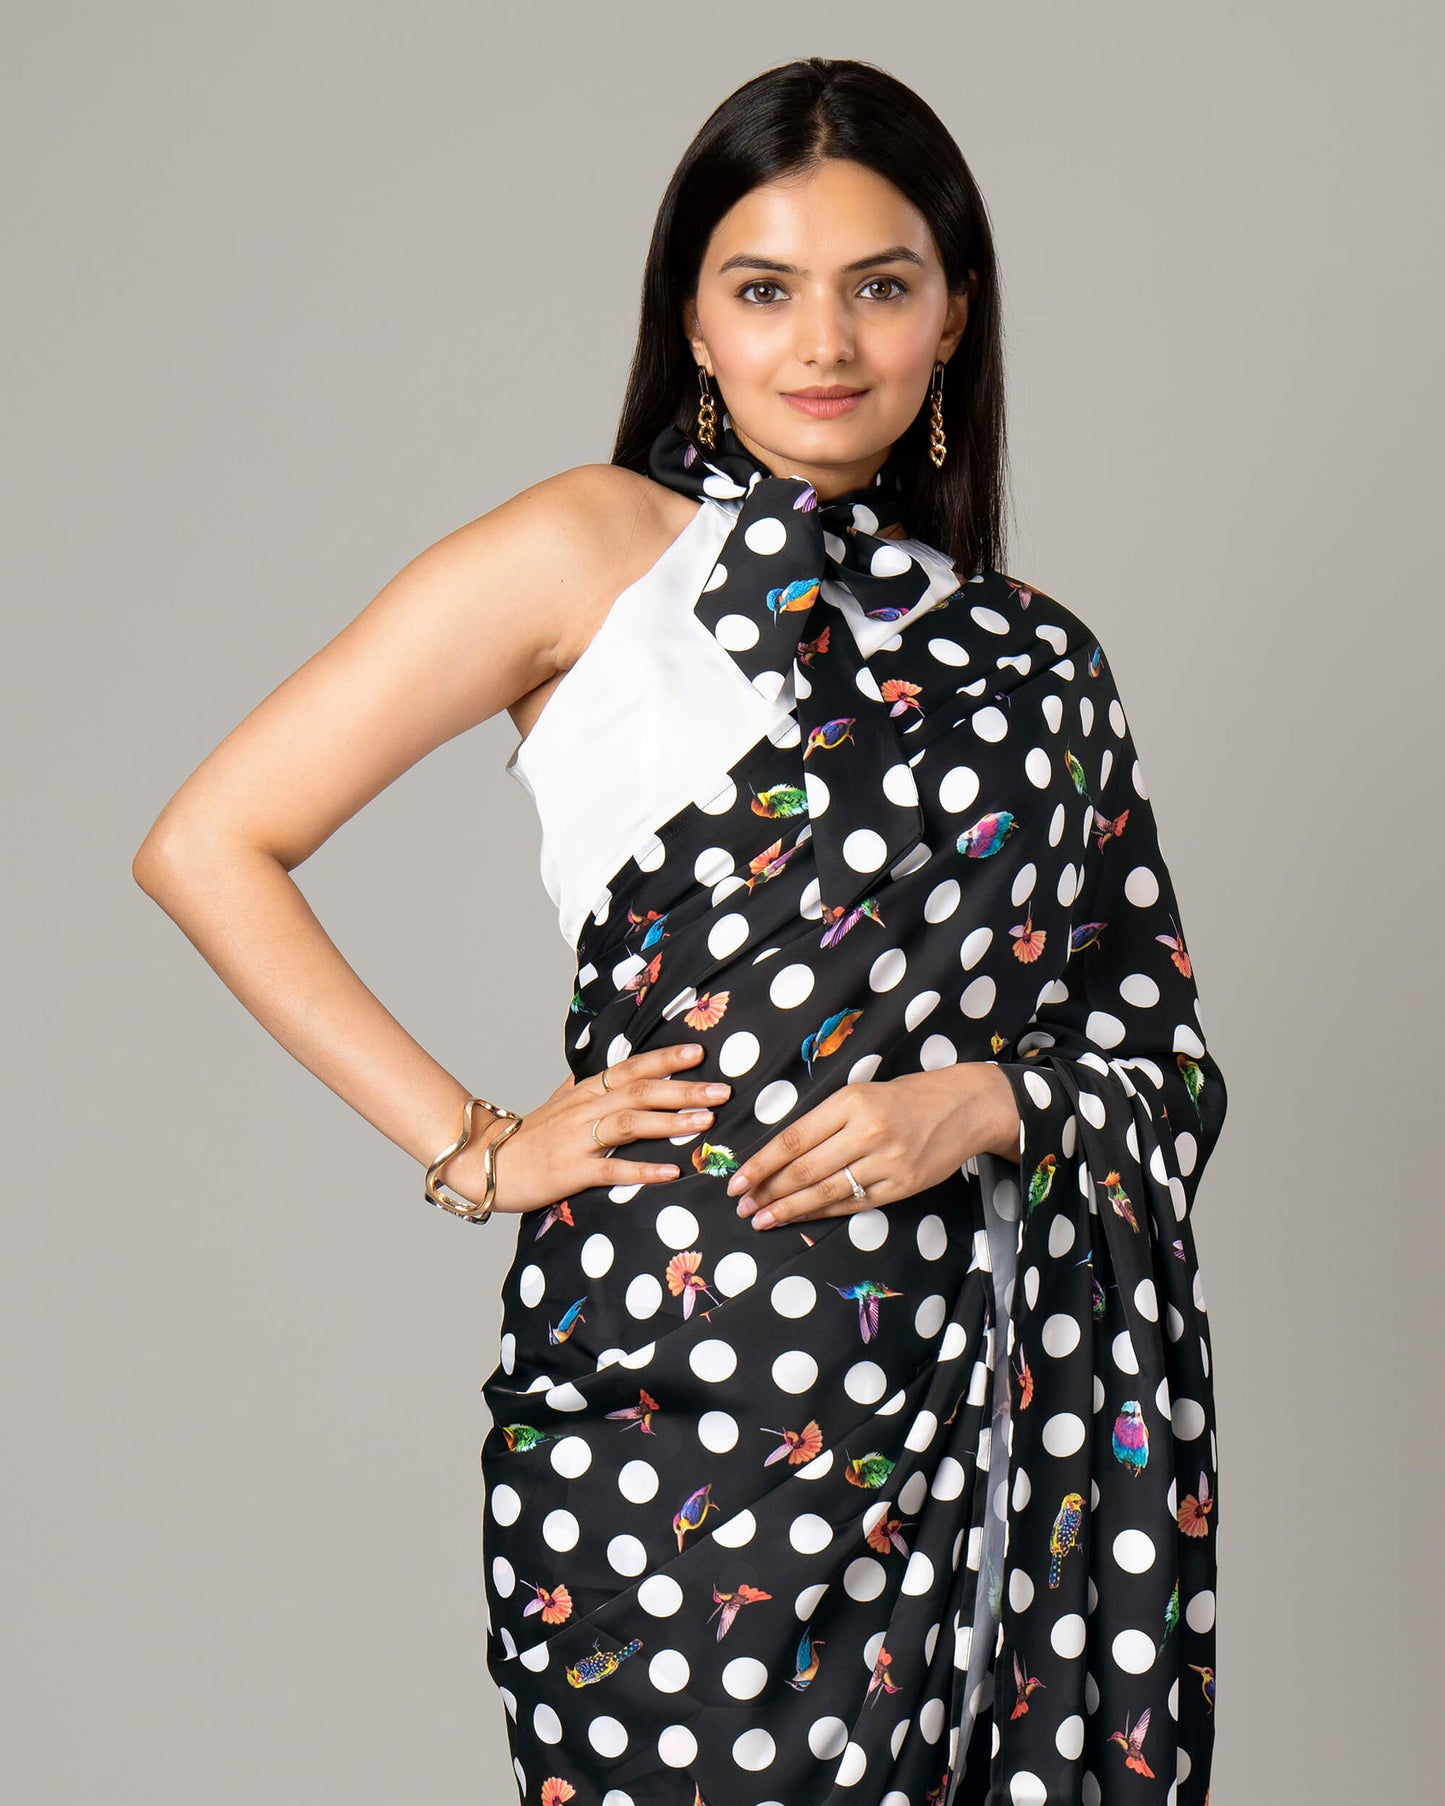 Exclusive Classic Women's Designer Bollywood Saree